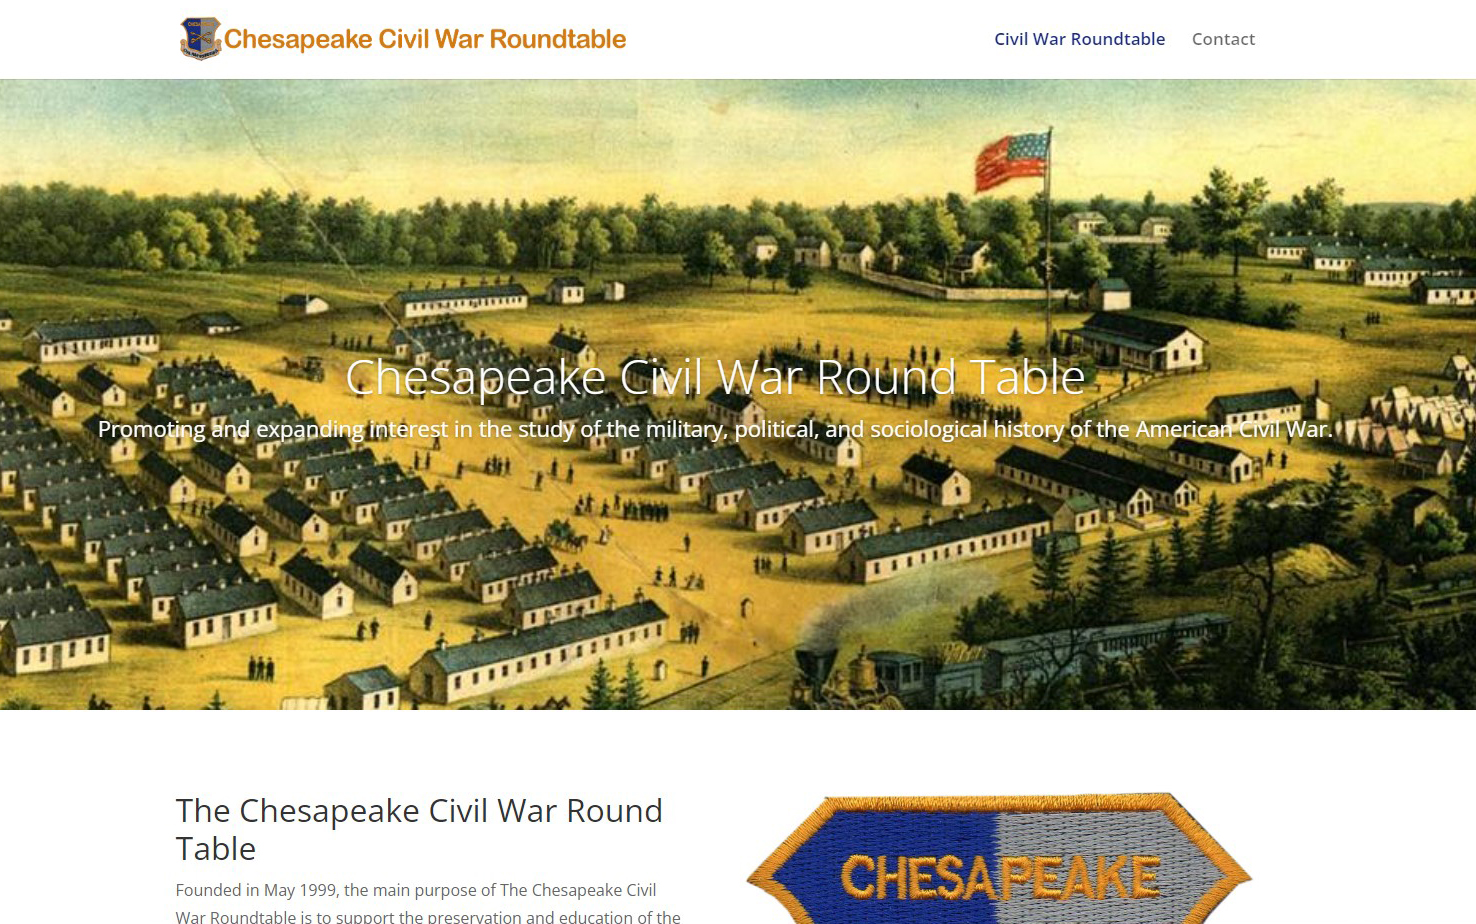 ccwr.net - Chesapeake Civil War Roundtable